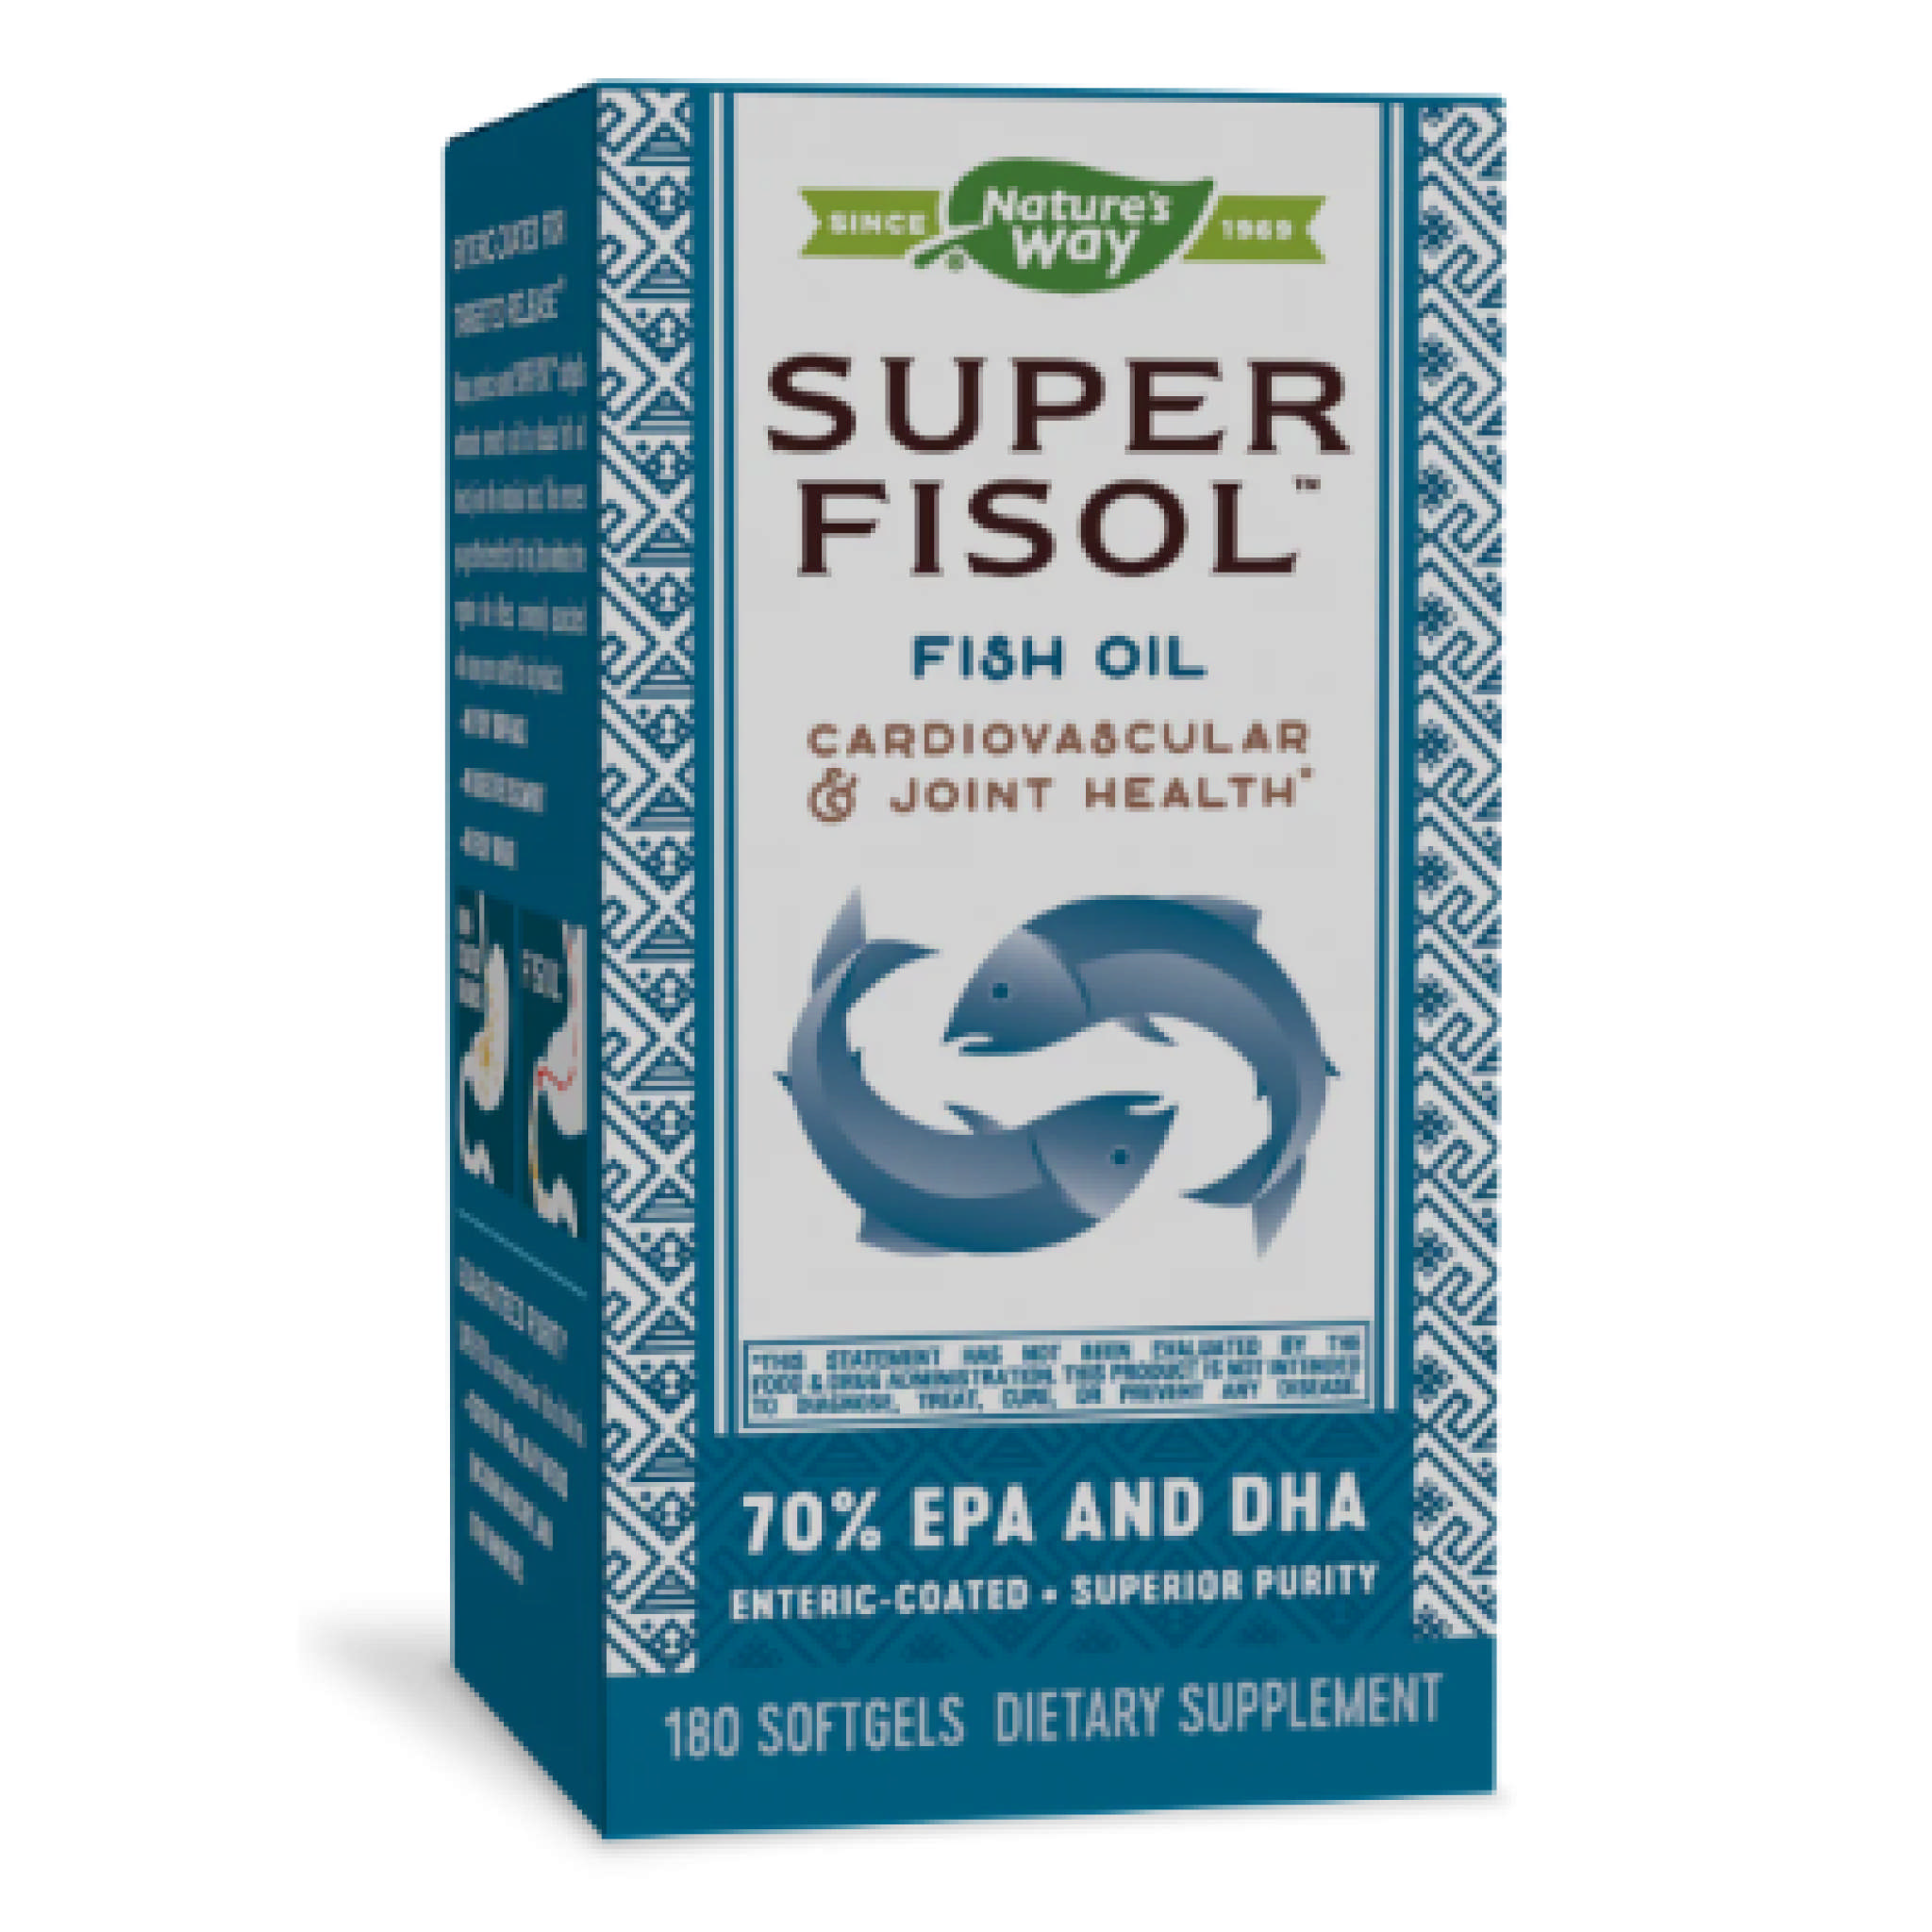 Natures Way Vitamin - Fisol Super Fish Oil